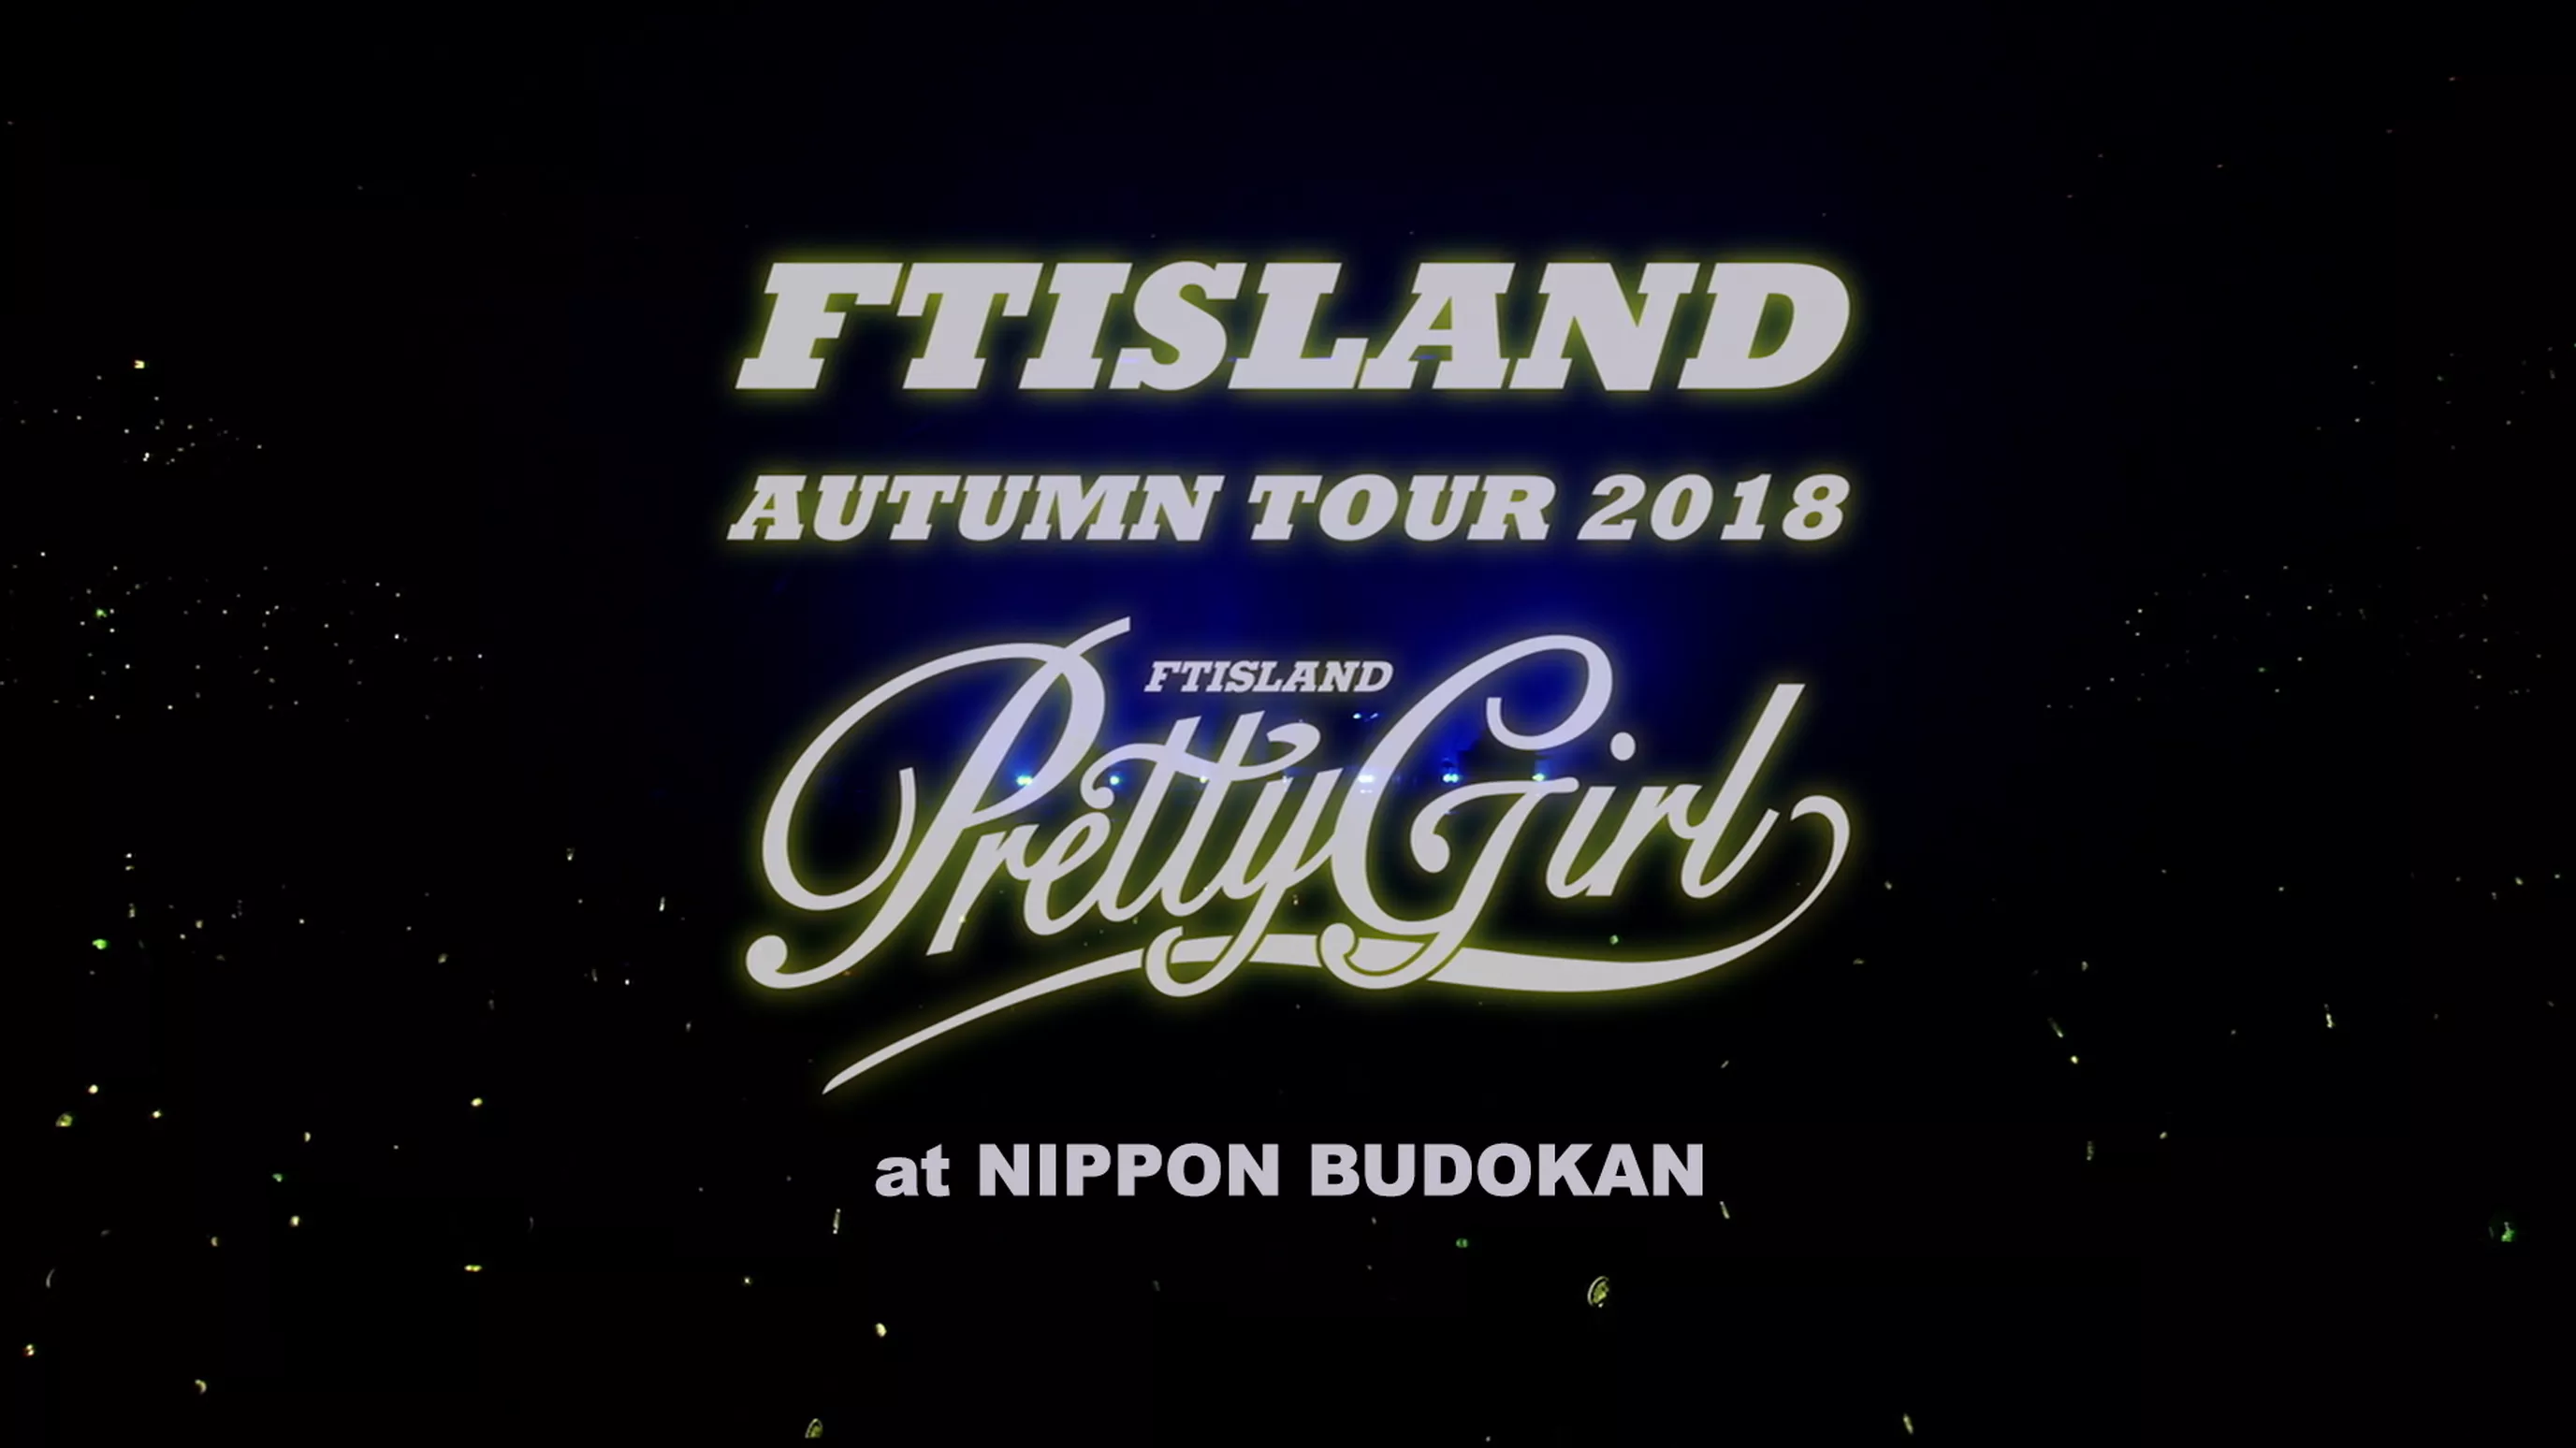 Autumn Tour 2018 -Pretty Girl- at NIPPON BUDOKAN